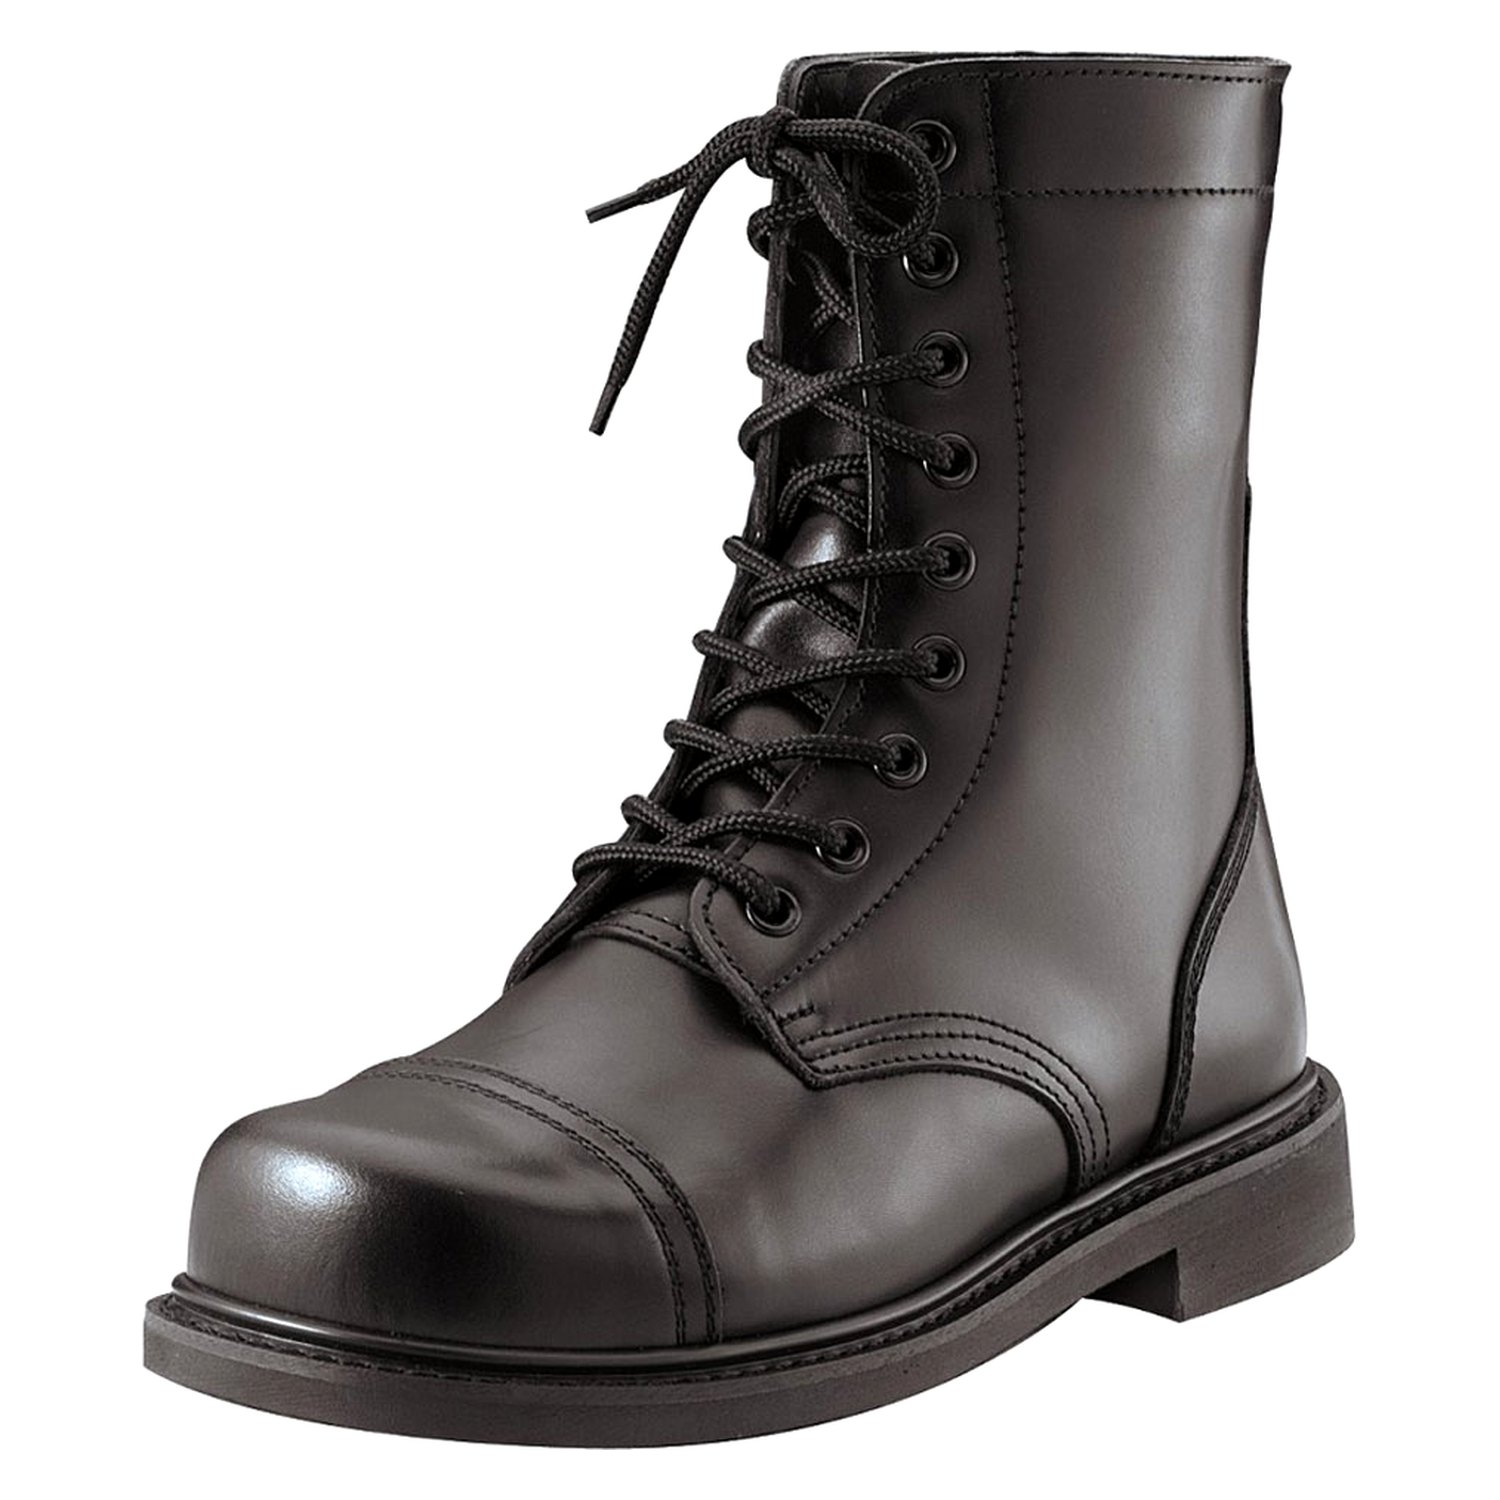 G.I. Type Steel Toe Combat Boots 